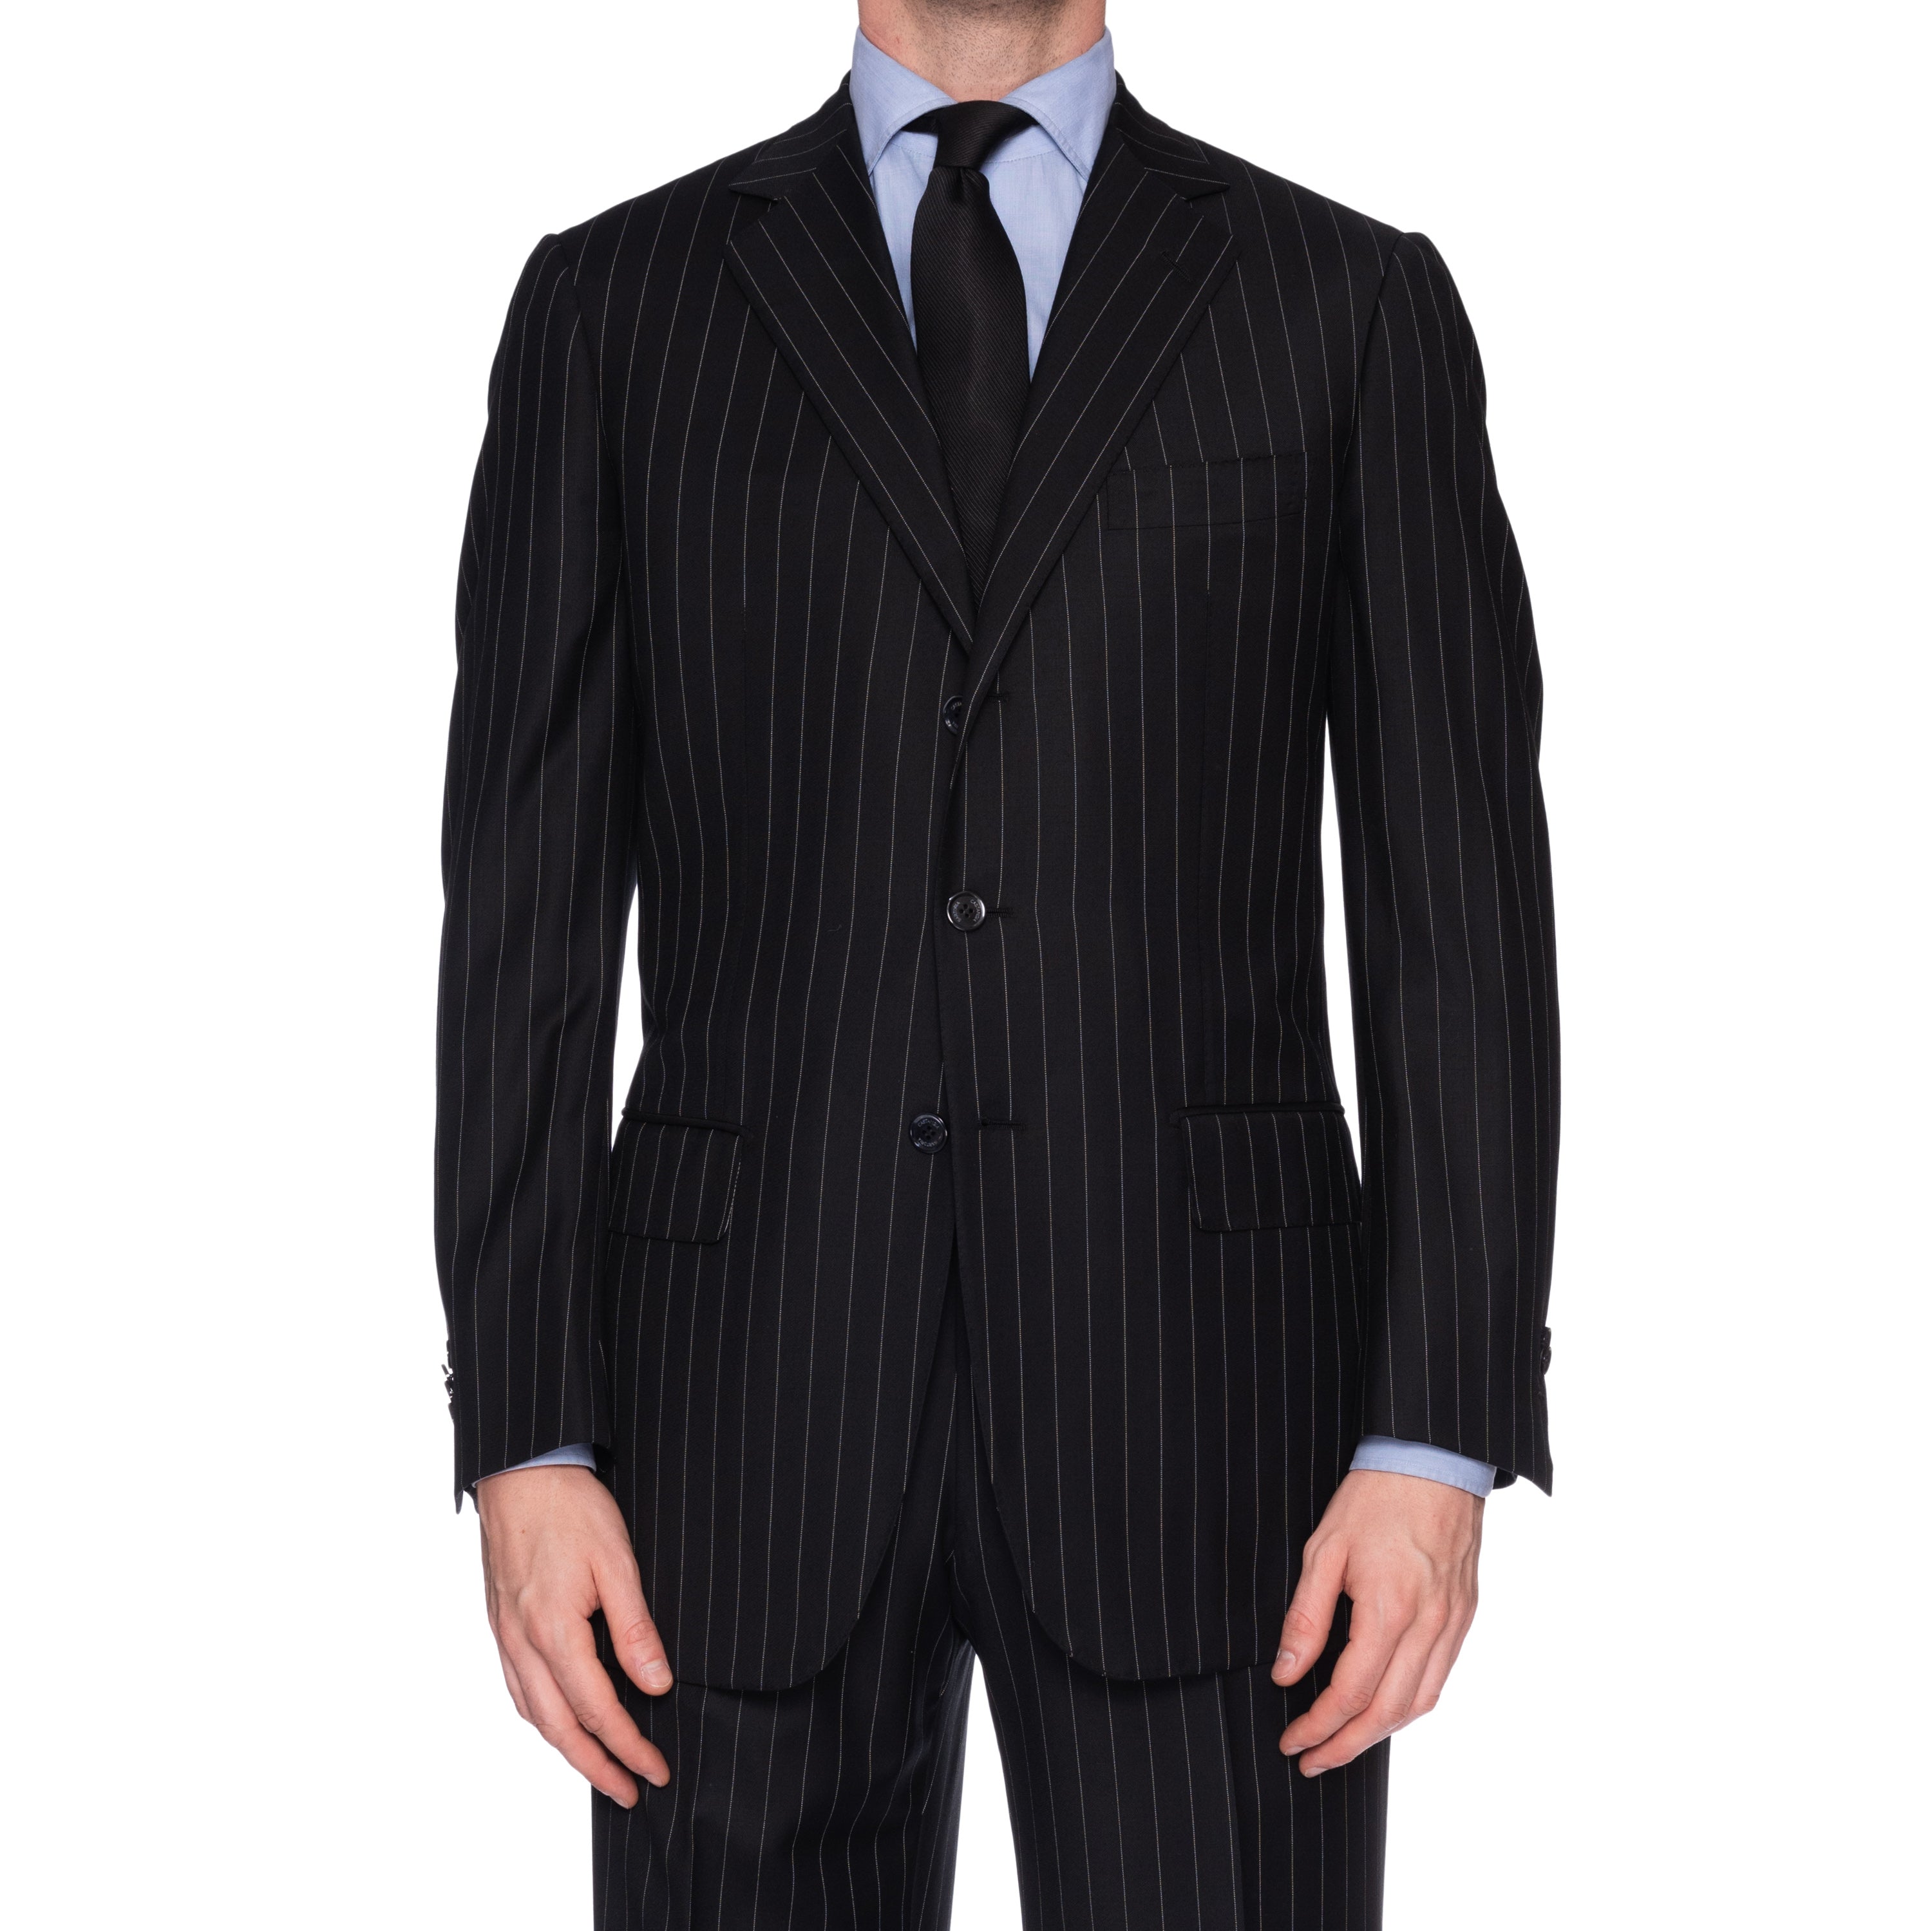 SARTORIA CASTANGIA Black Pin Striped Wool Super 150's Suit EU 52 NEW US 42 CASTANGIA